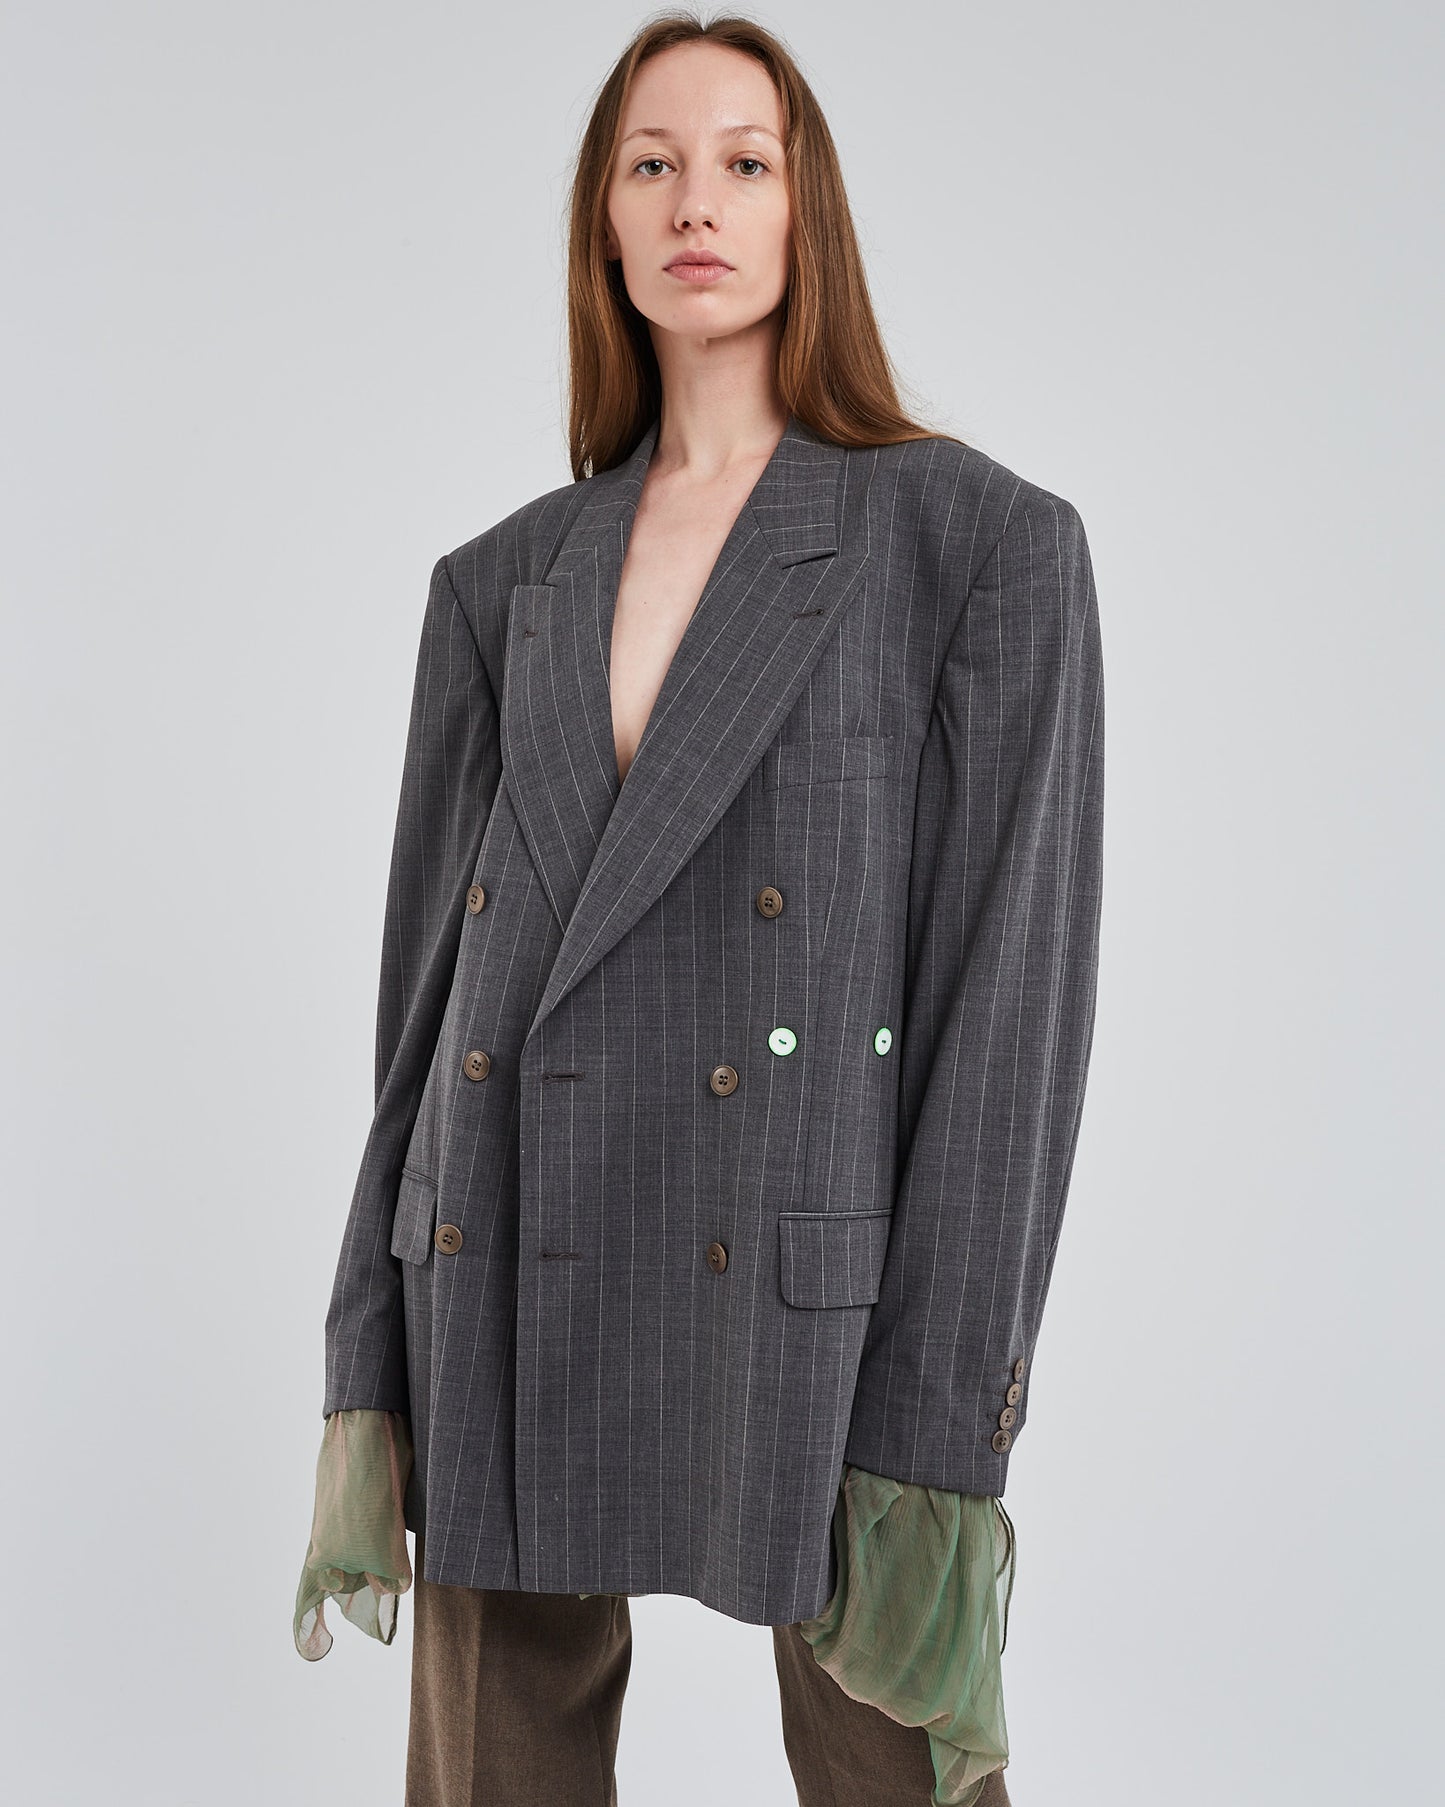 Elvire wool and silk jacket